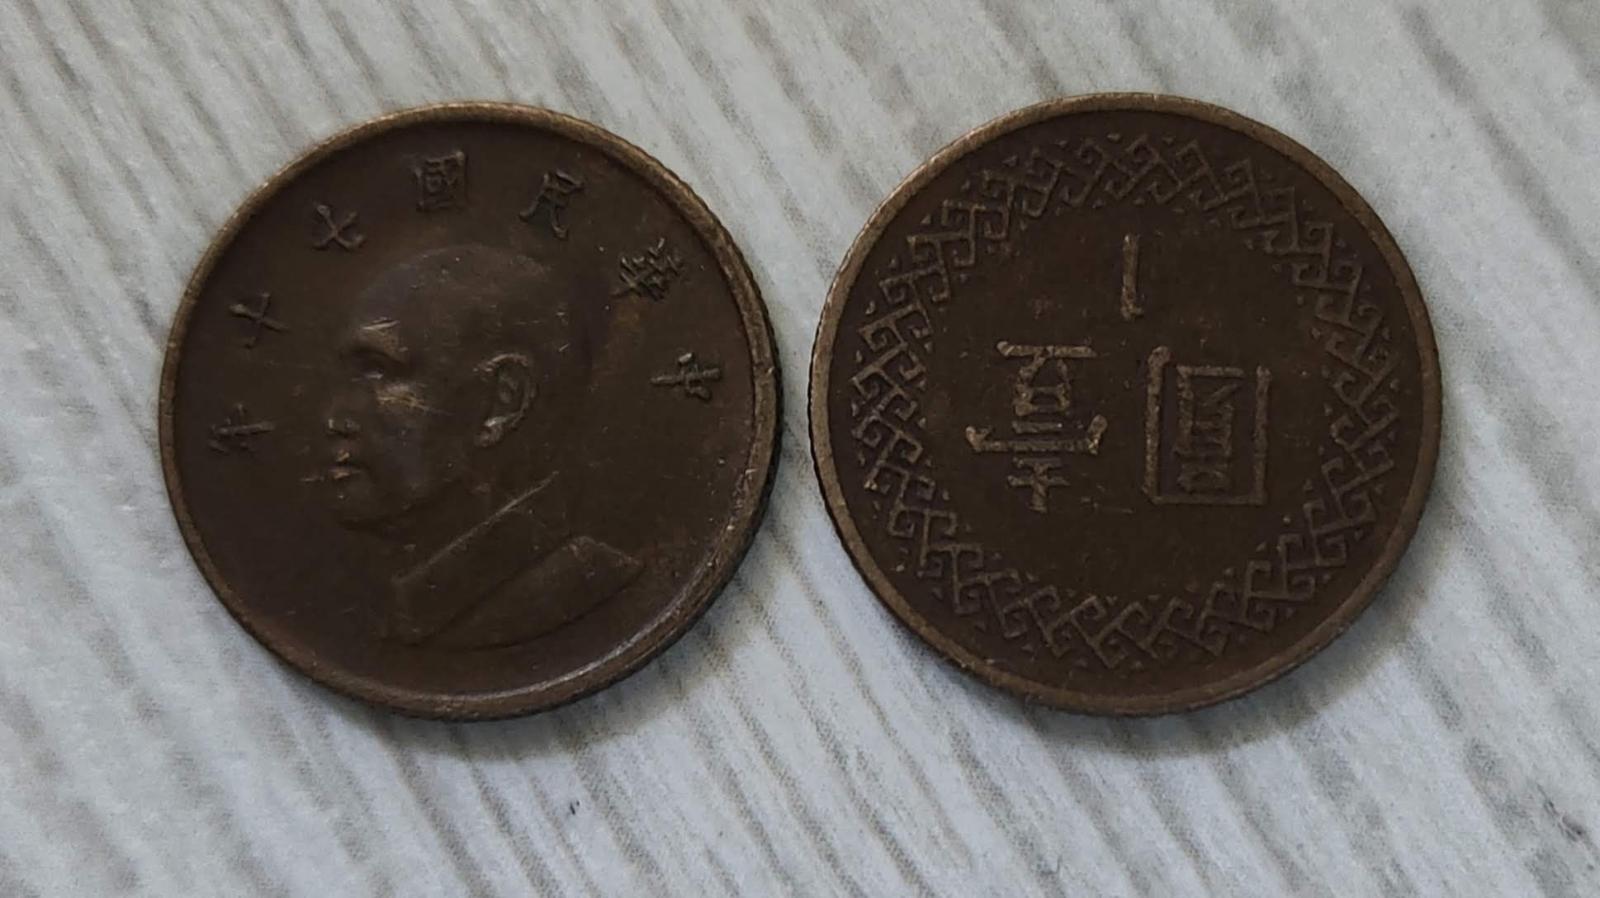 TAIWAN 1 dolár Stav 1/1 M-0685 - Zberateľstvo